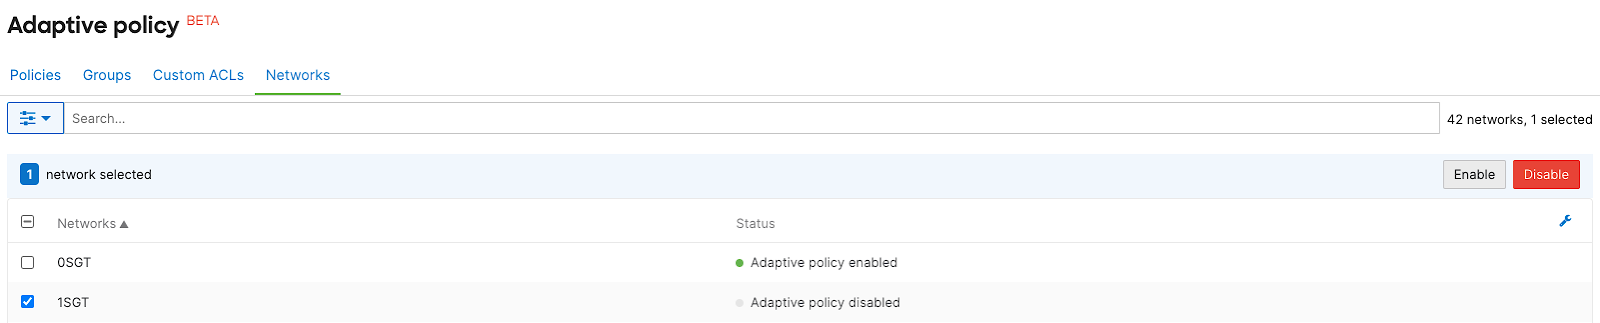 Adaptive policy network menu option.